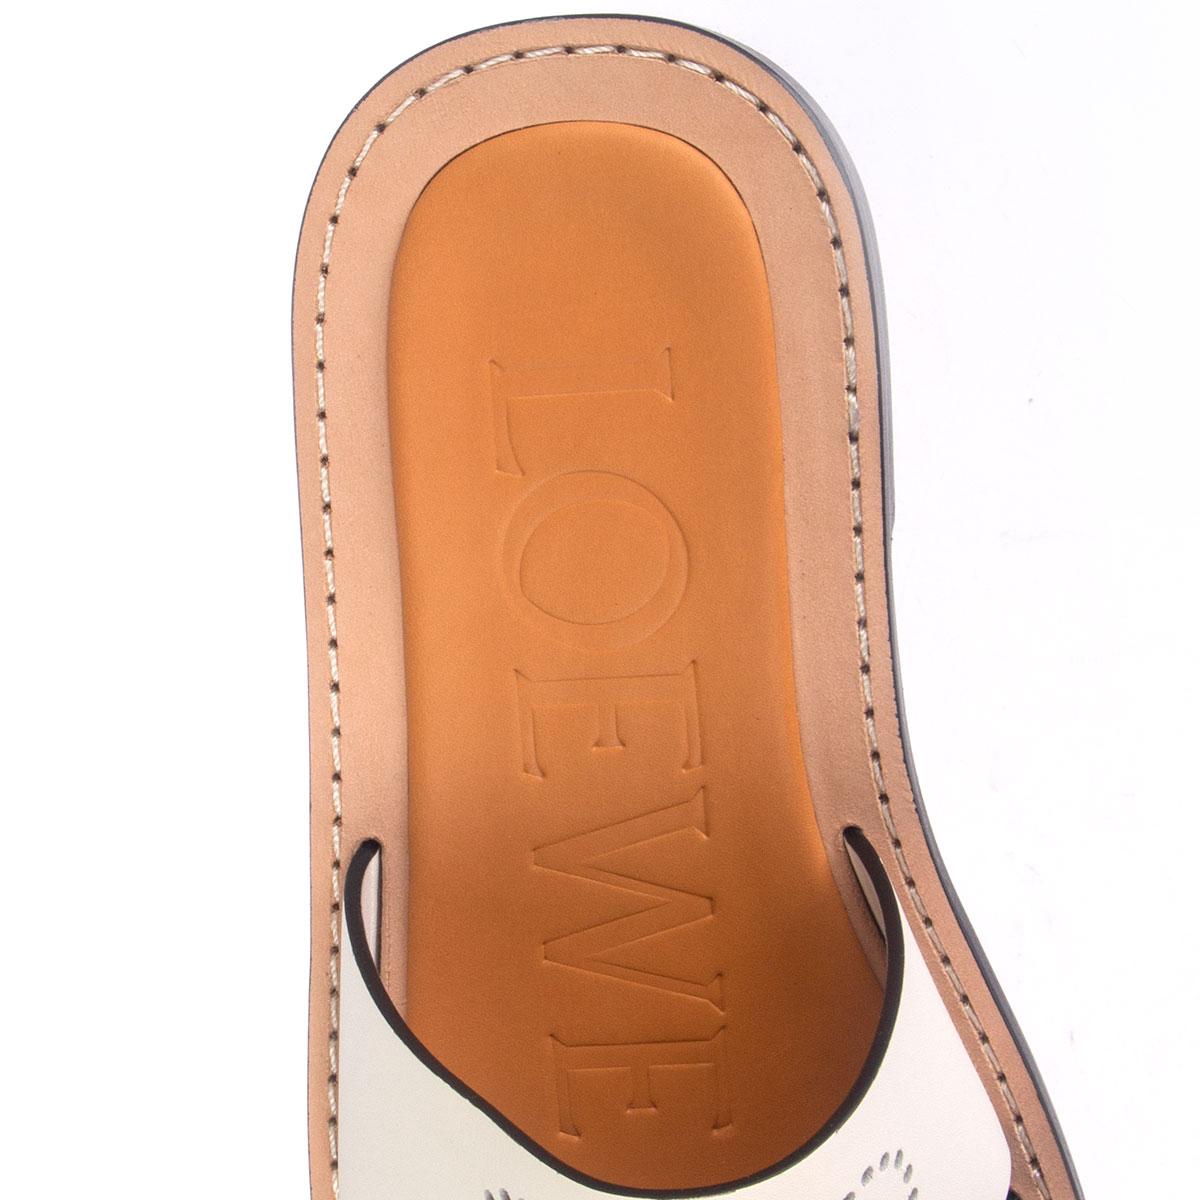 Beige LOEWE off-white leather ANAGRAM Slides Sandals Shoes 37